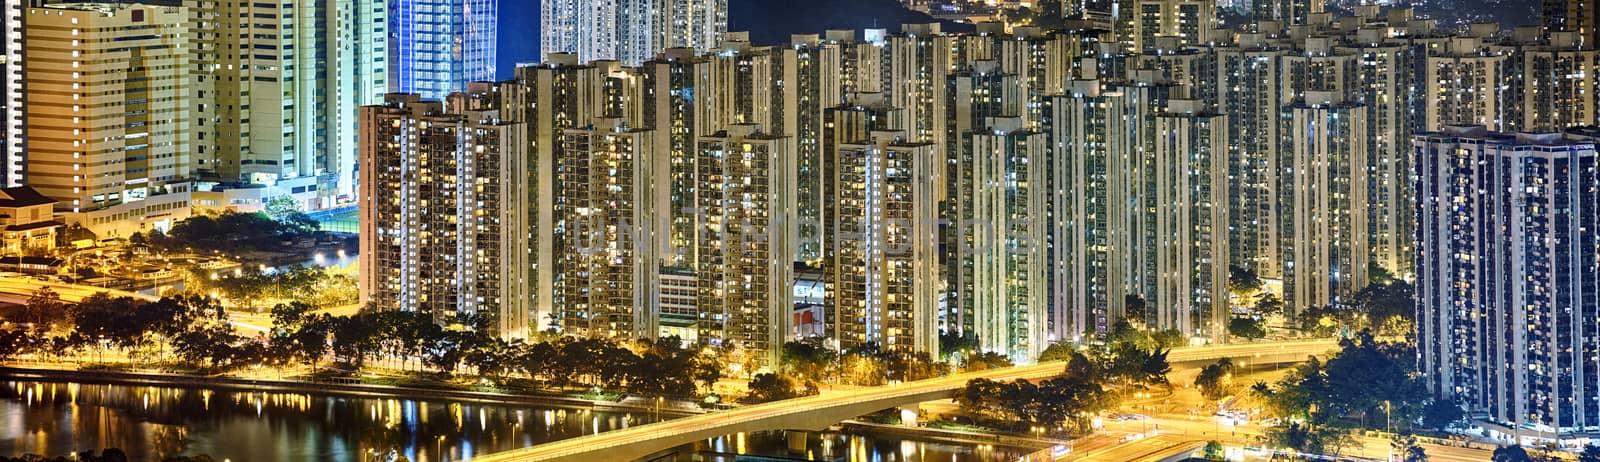 Hong Kong Night by cozyta